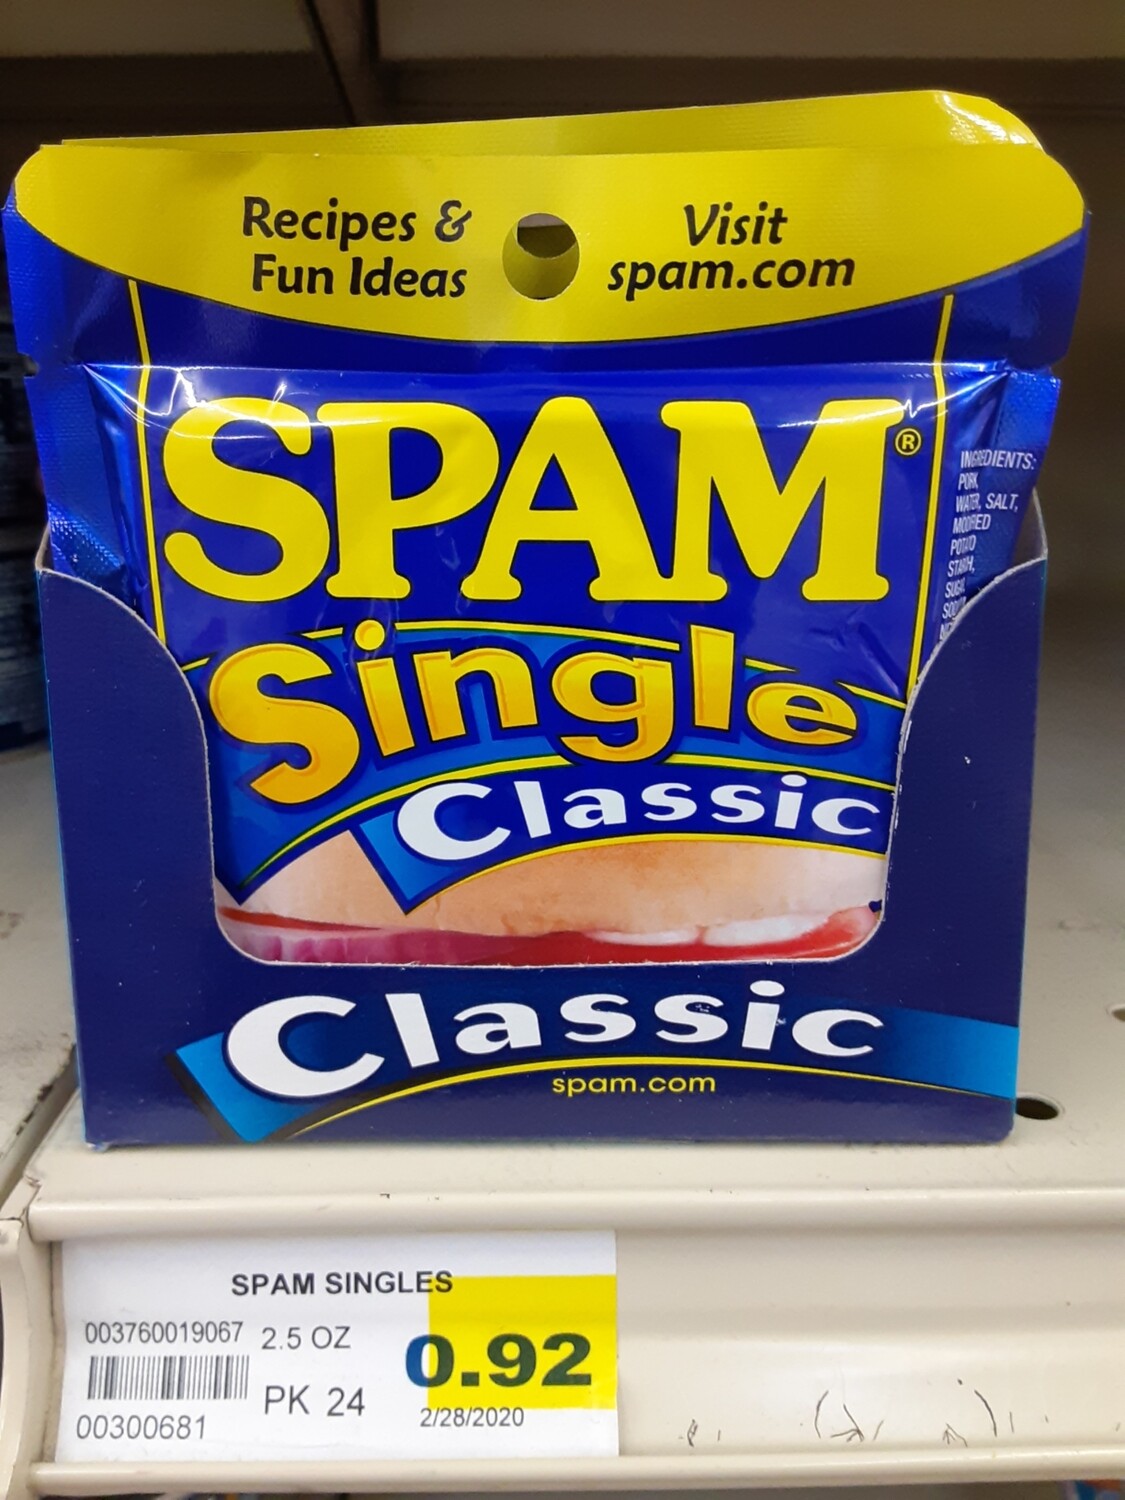 Cash Saver: Spam Single Classic